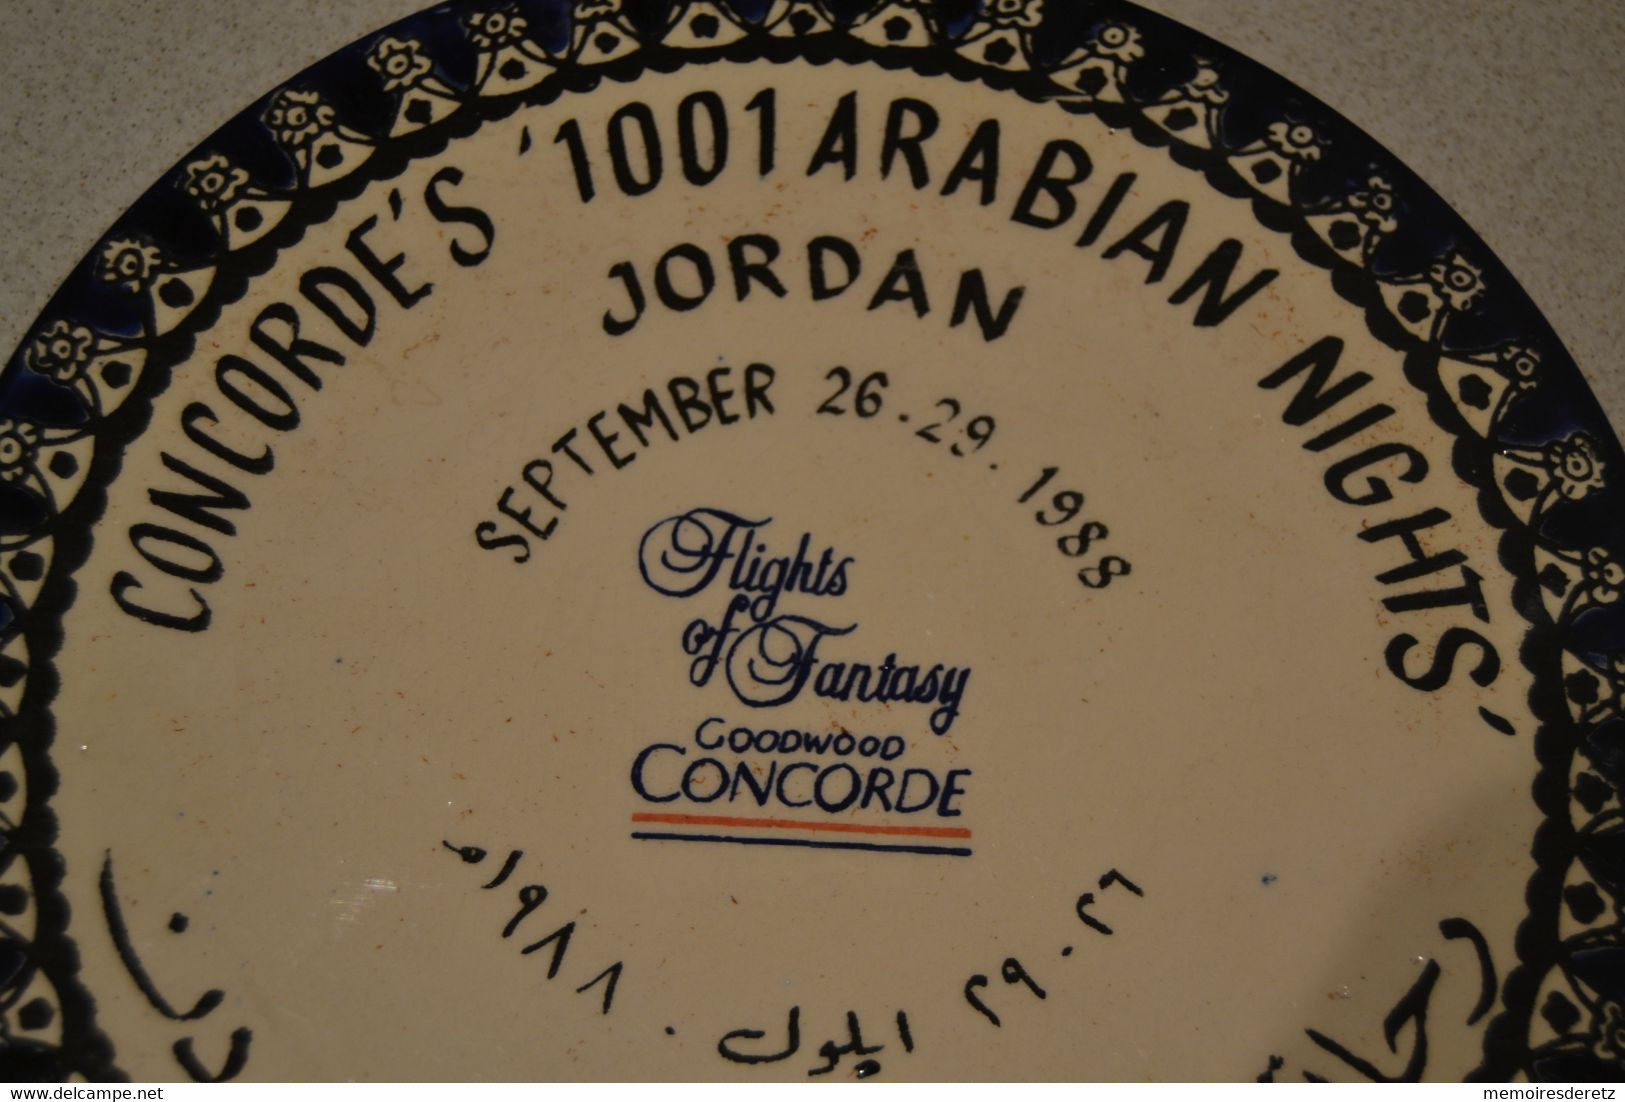 avion CONCORDE- assiette Concorde's 1001 Arabian nights' JORDAN 26-29/09/1988 Jordanie Flights of Fantasy Goodwood